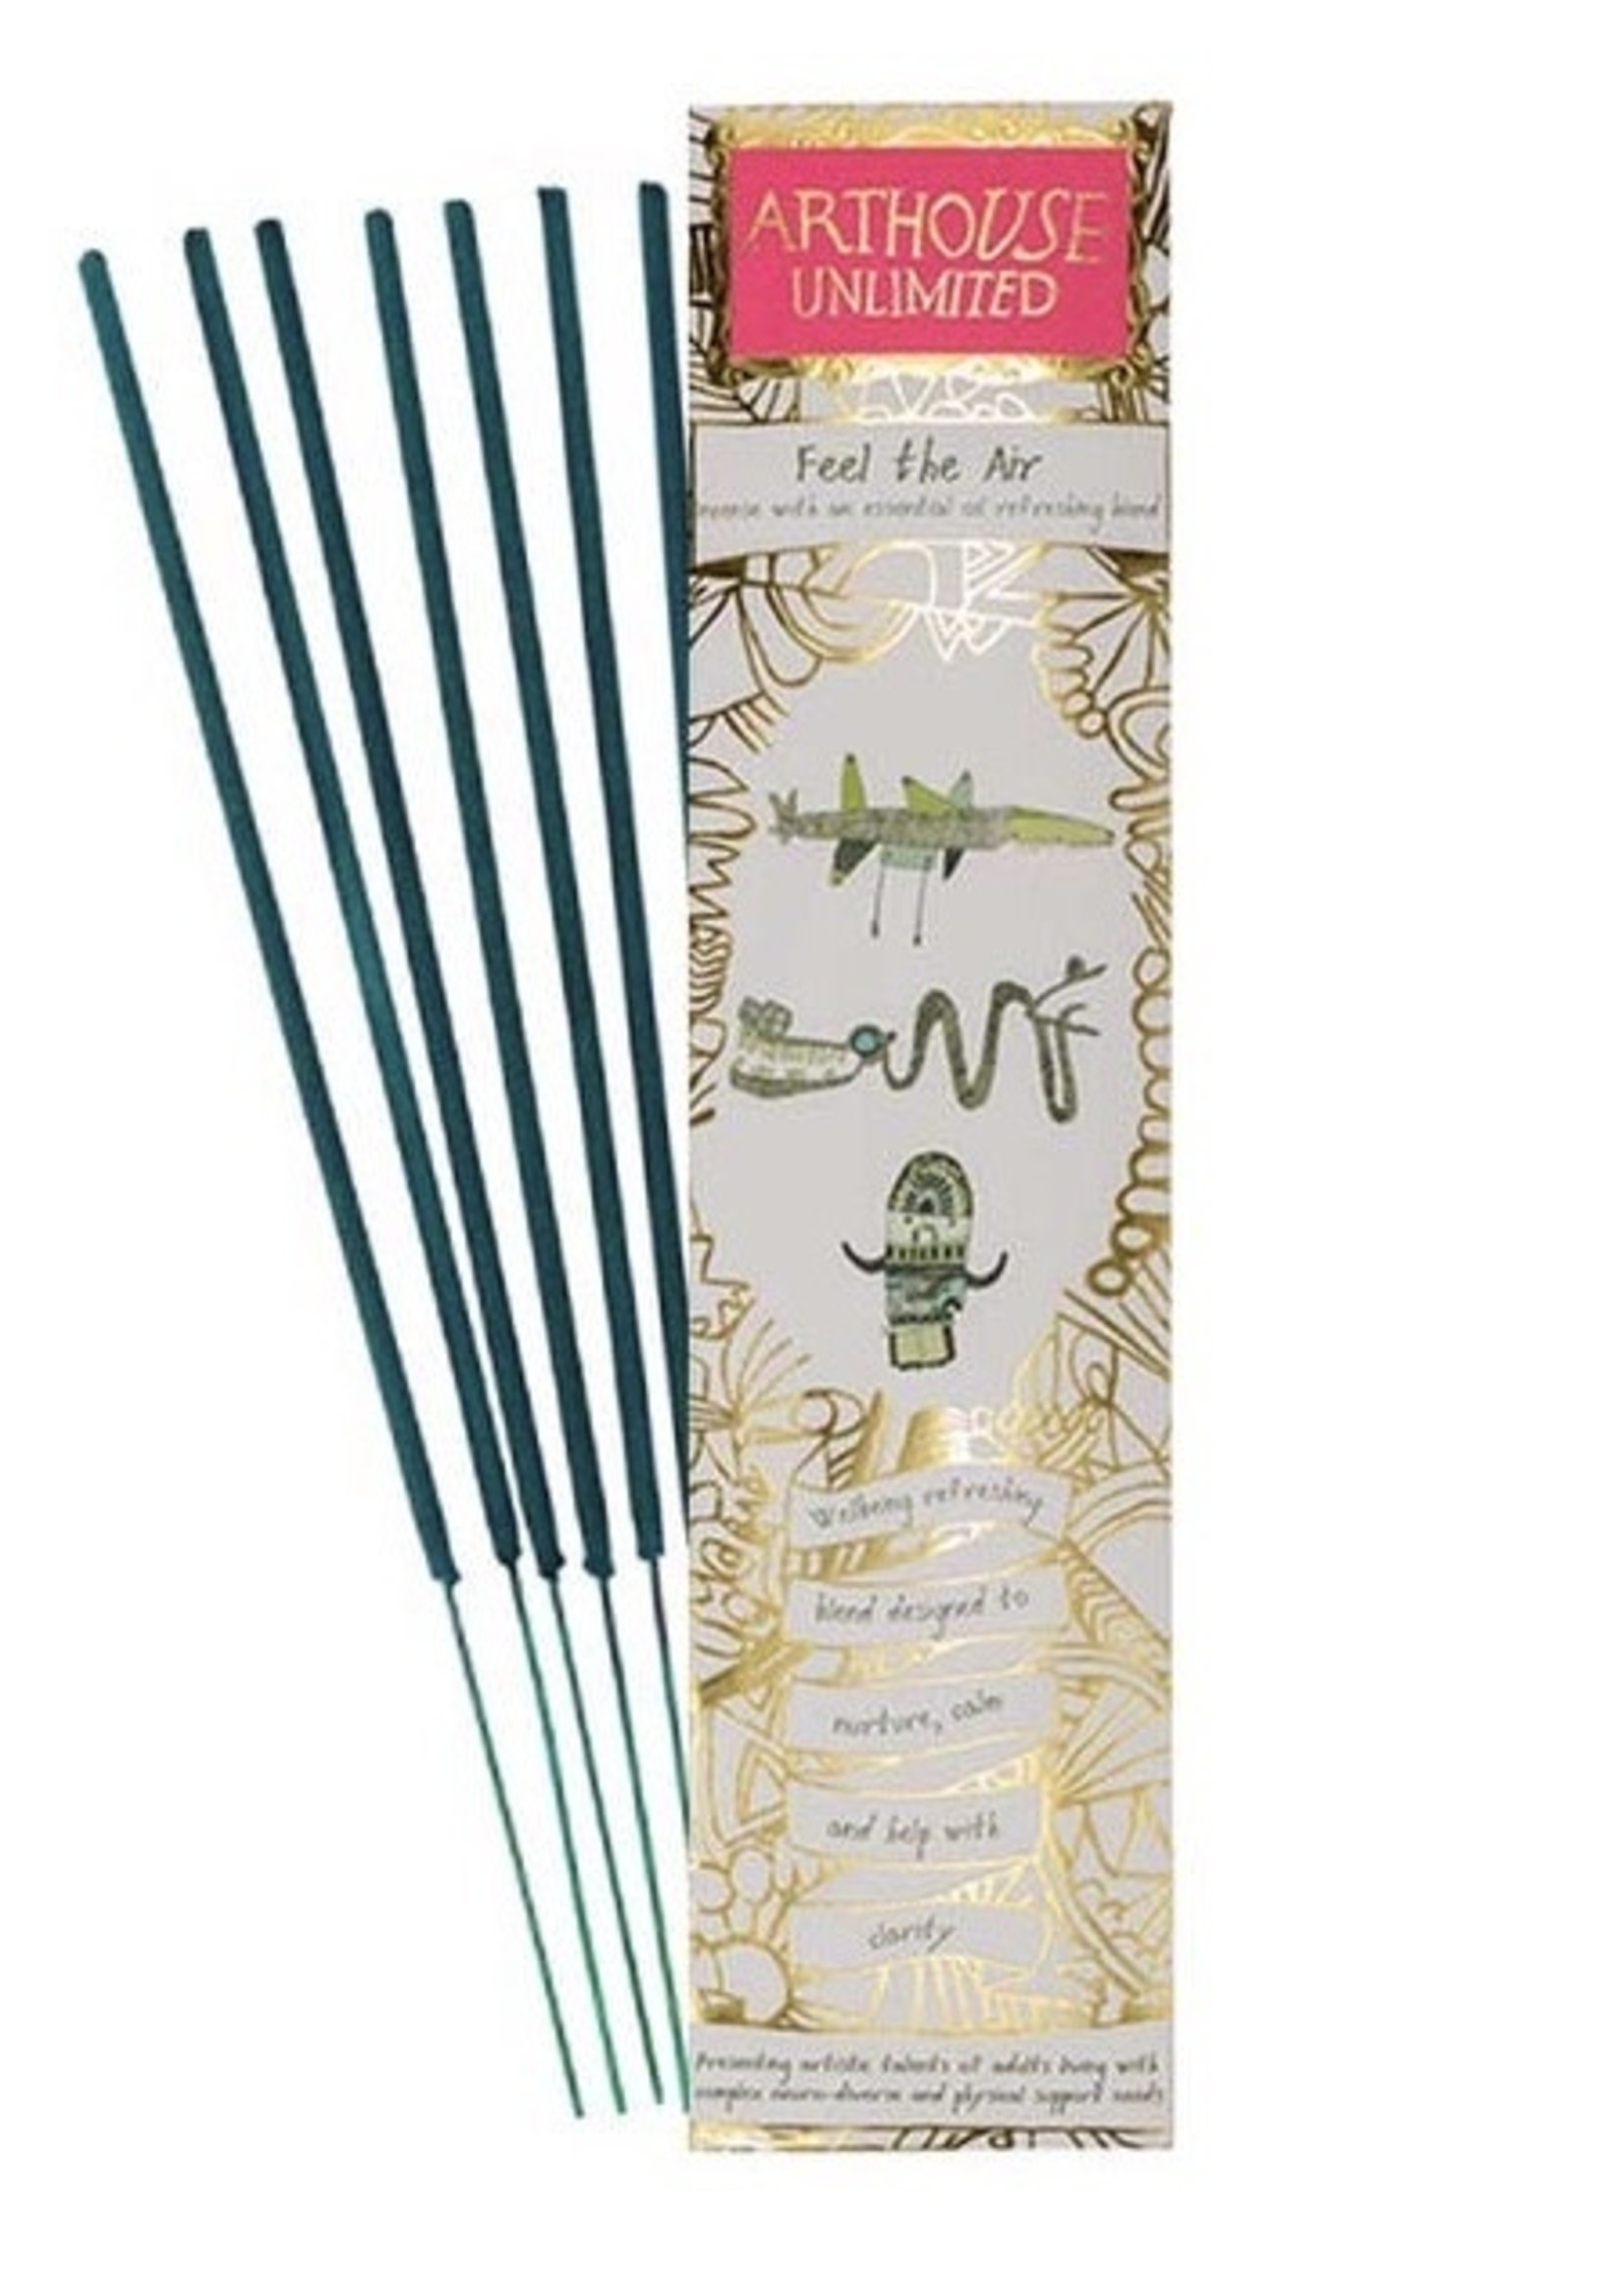 Arthouse  Unlimited Arthouse Unlimited incense sticks